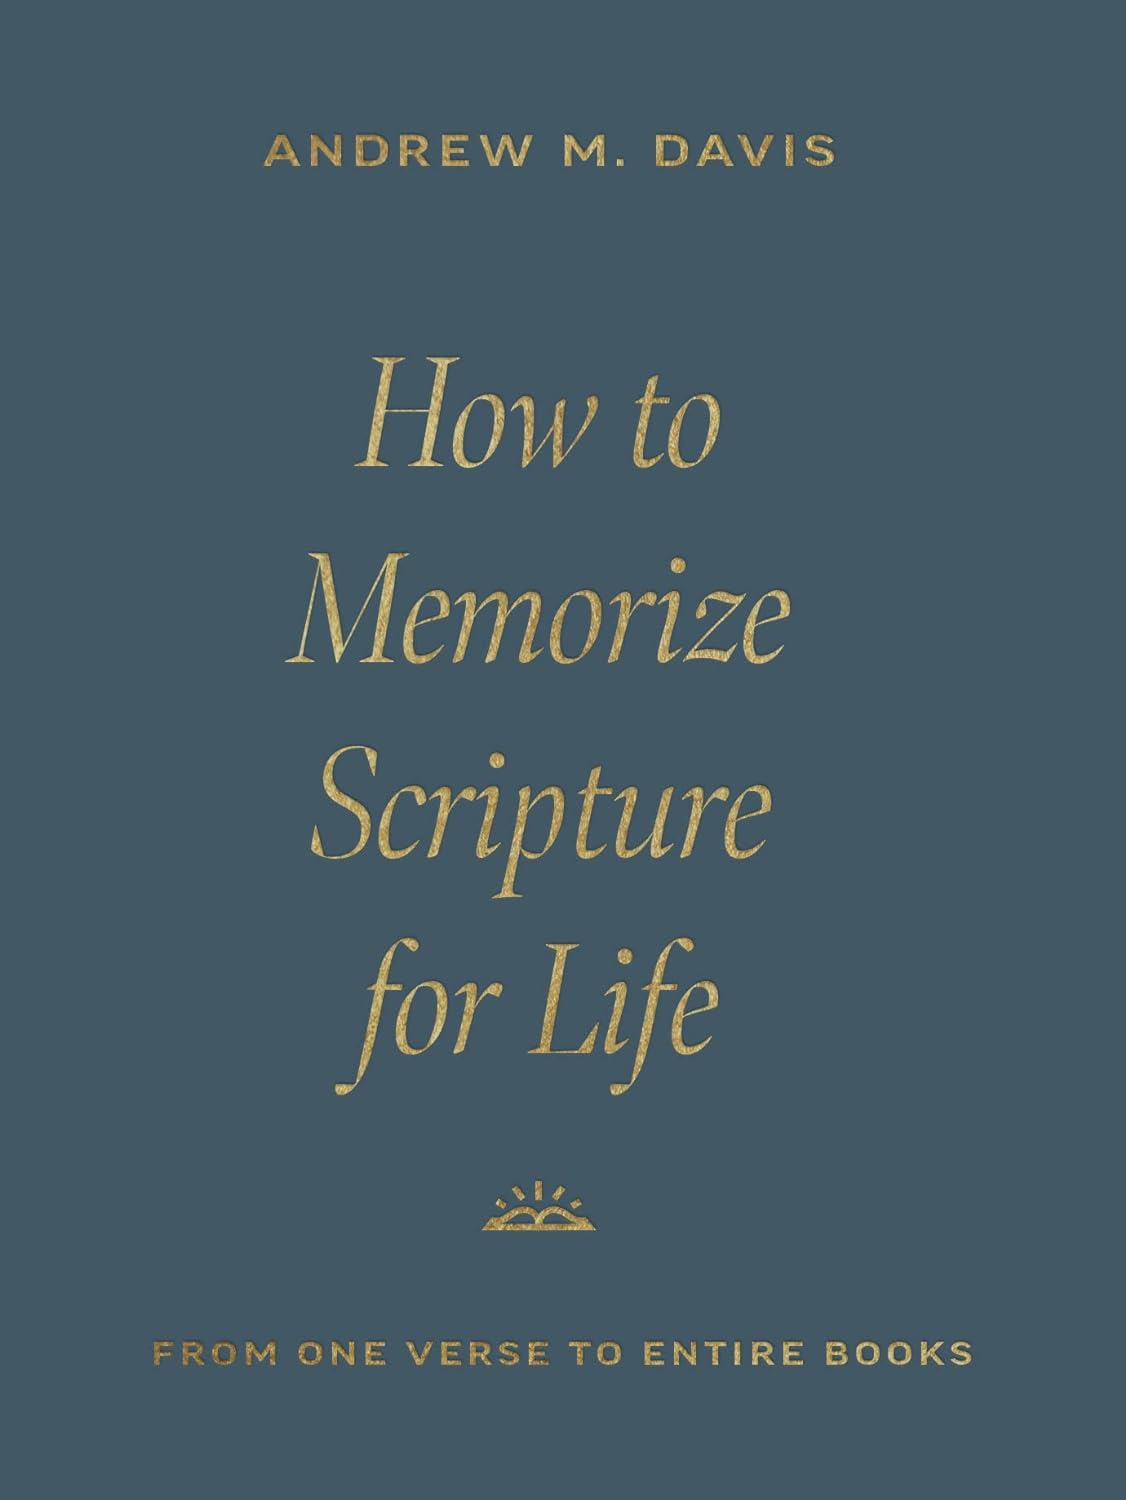 How to Memorize Scripture for Life (Davis)